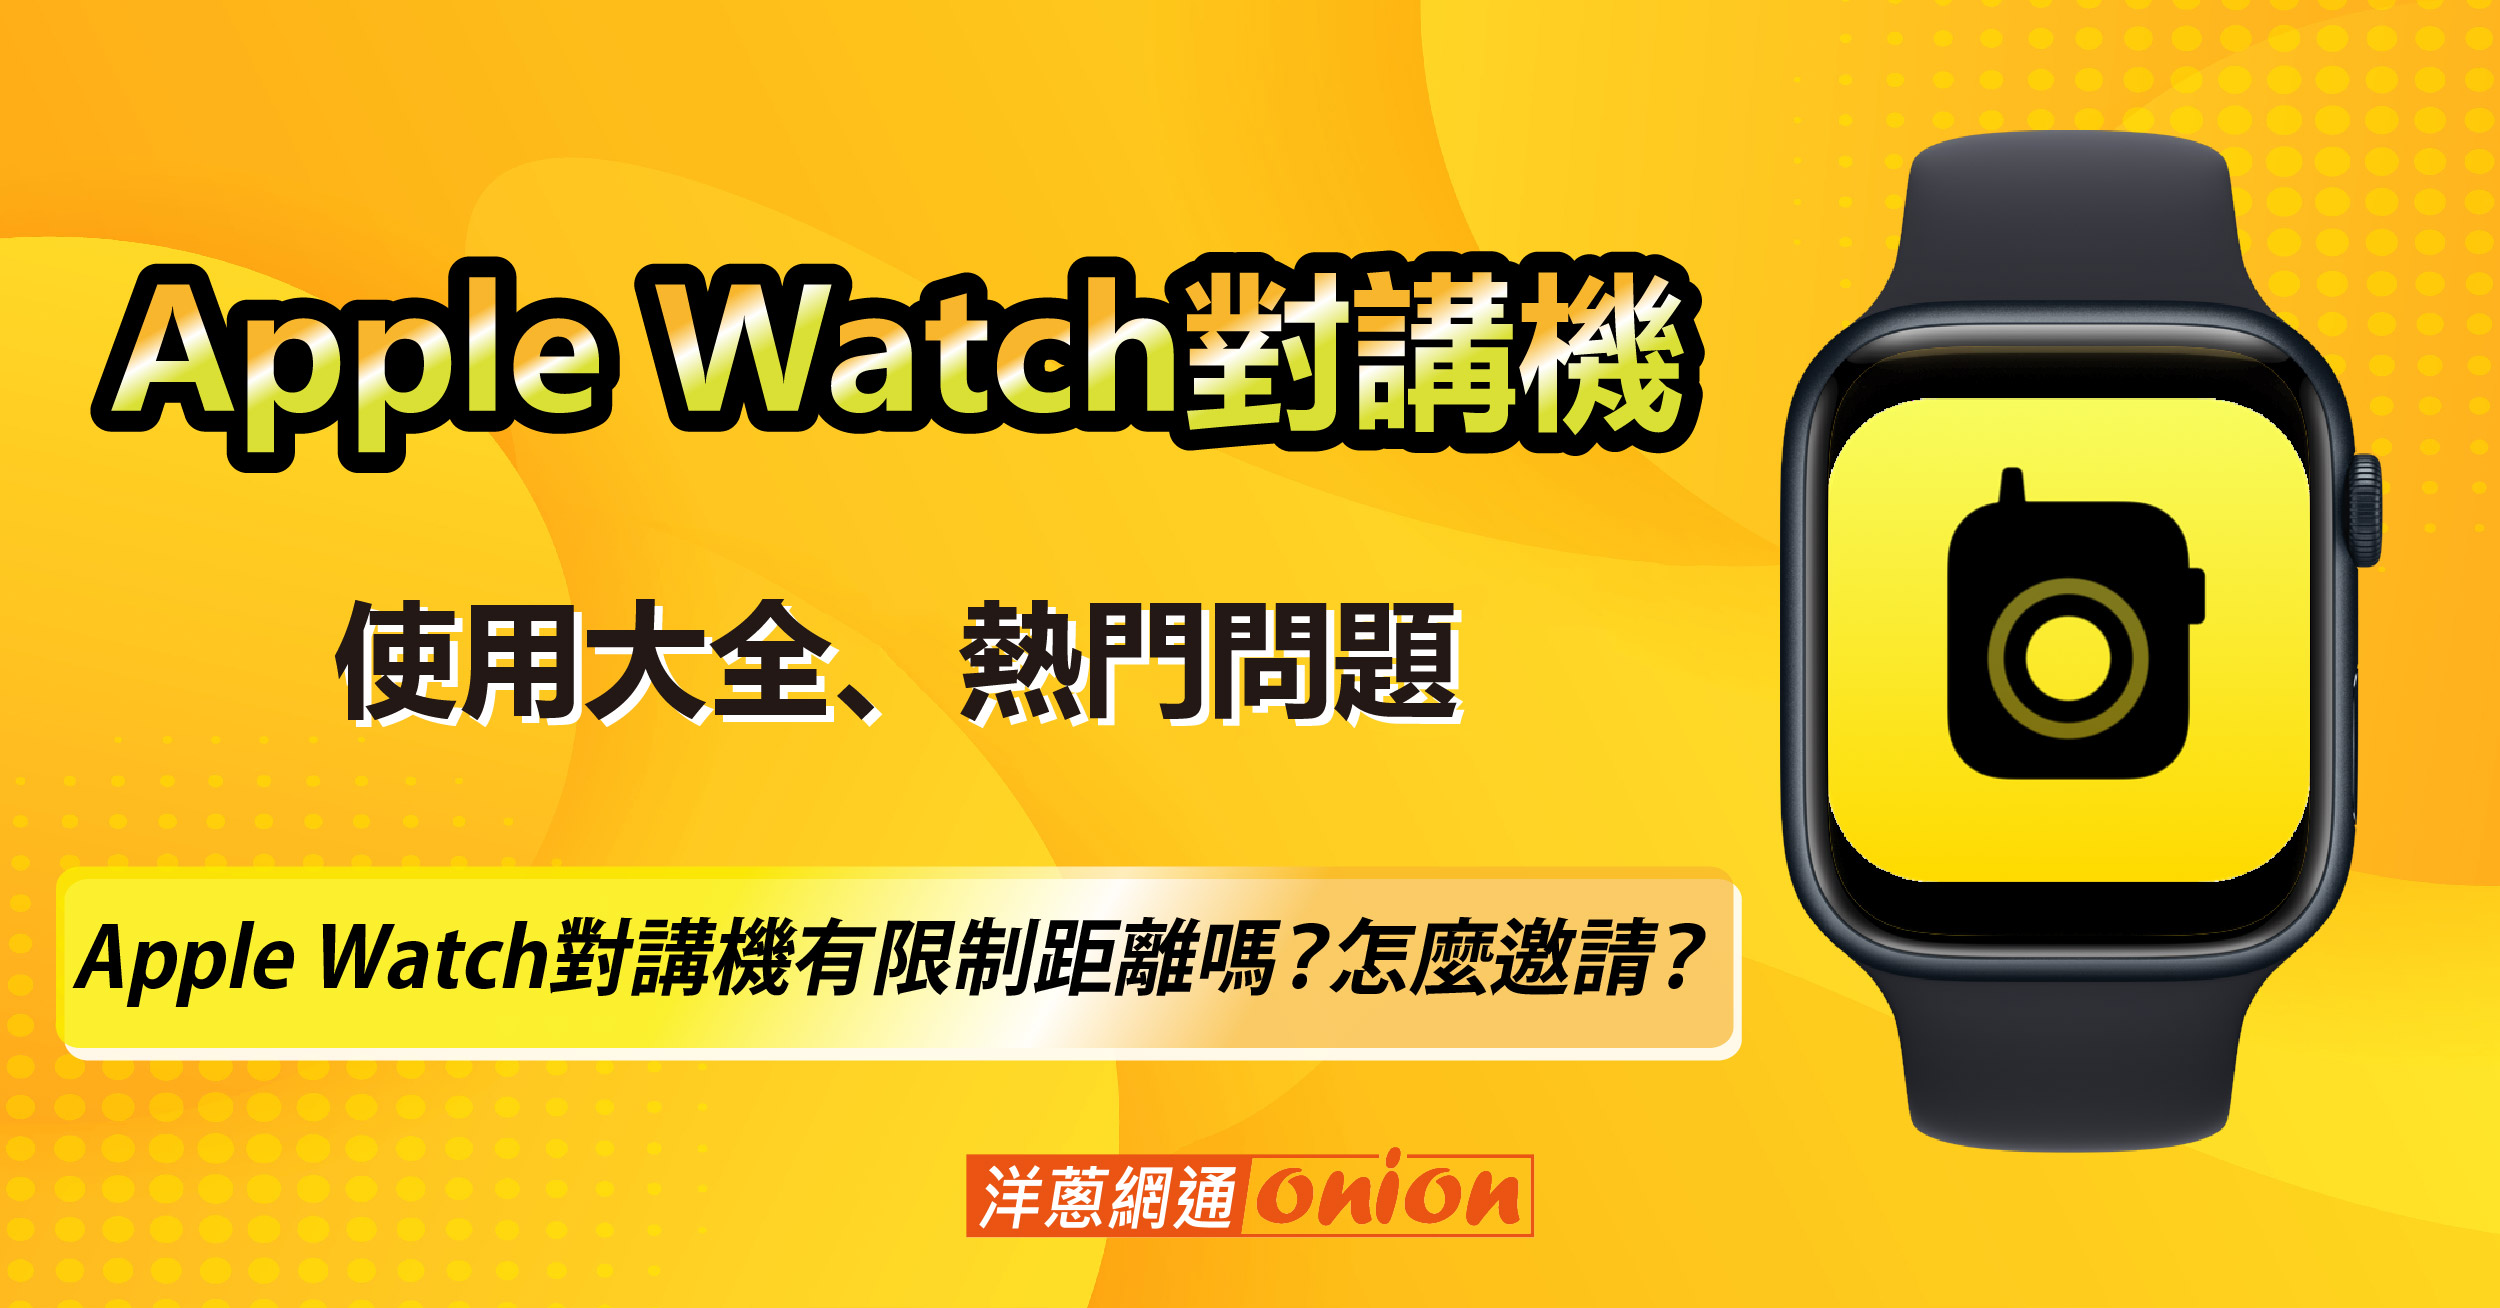 Apple Watch對講機使用大全：Apple Watch對講機有限制距離嗎？怎麼邀請？